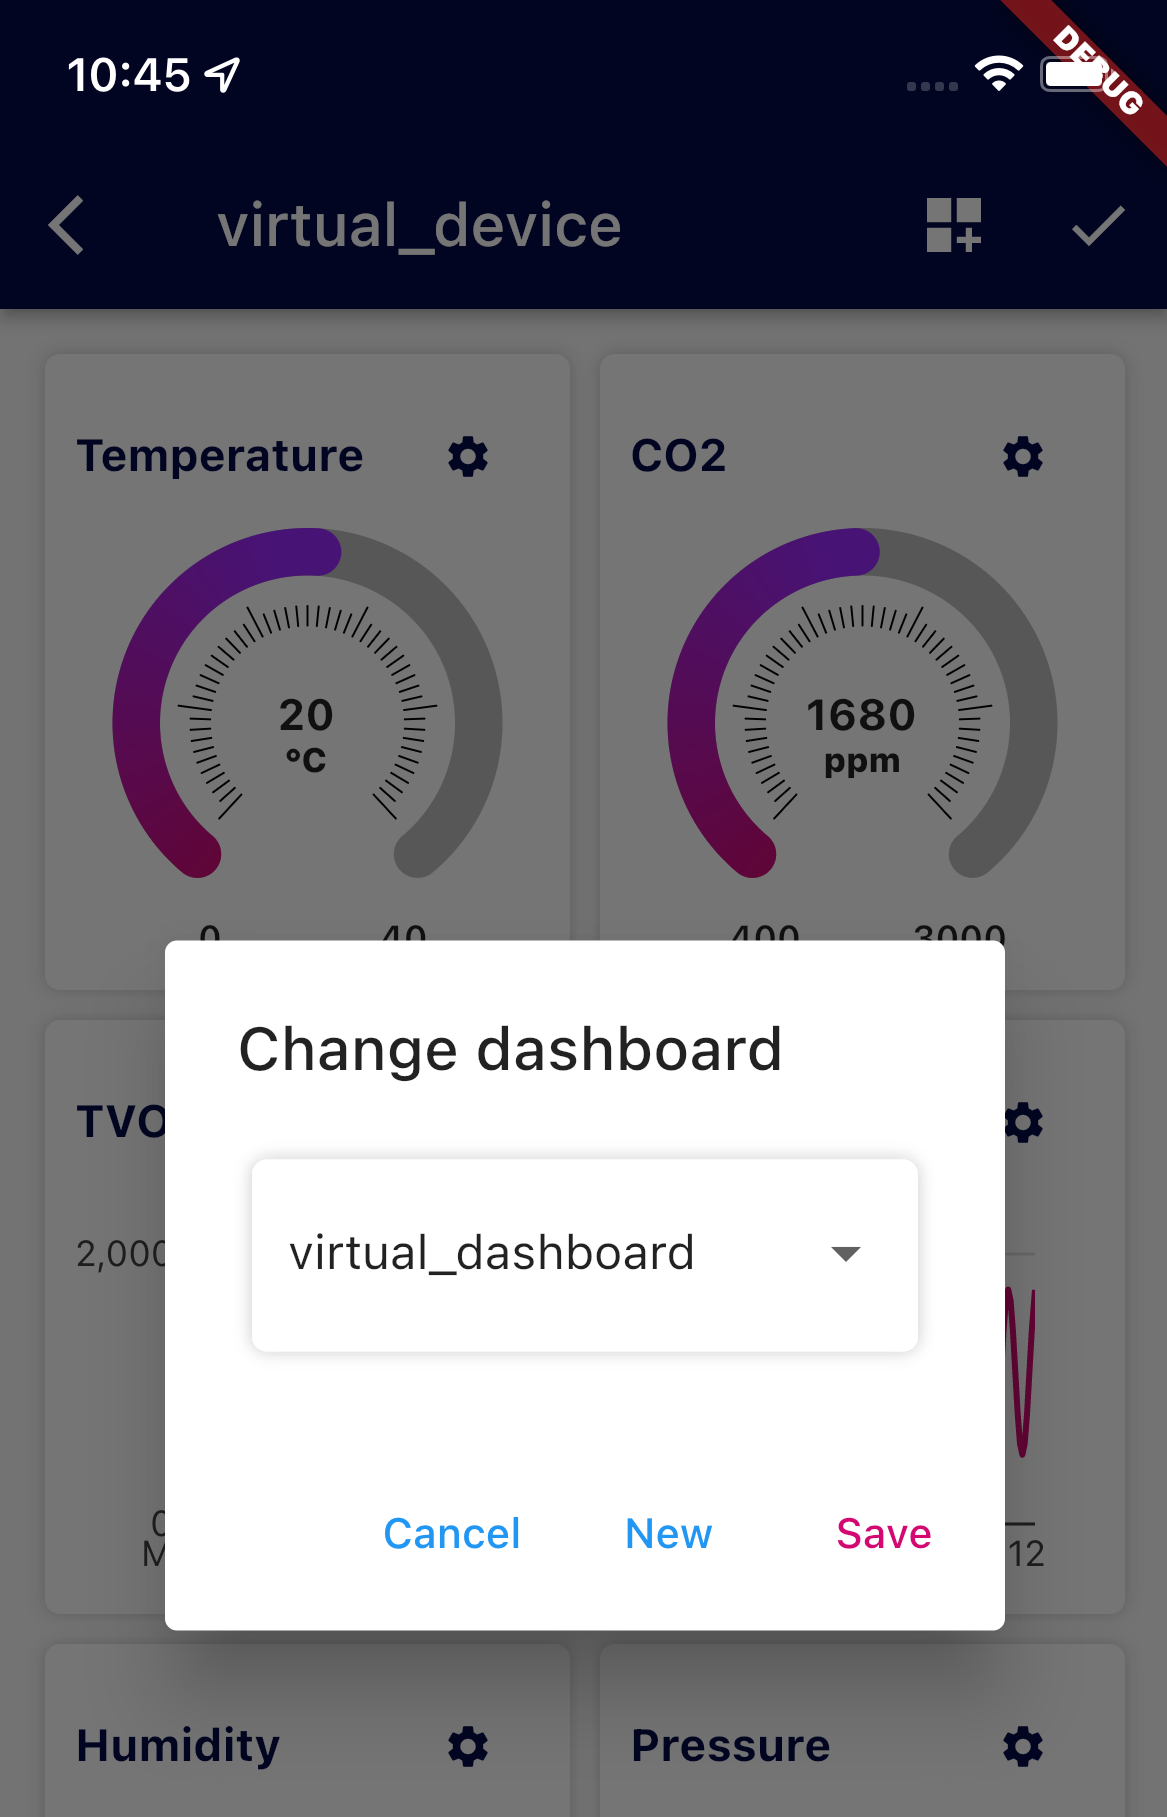 device-dashboard-change-dashboard.png